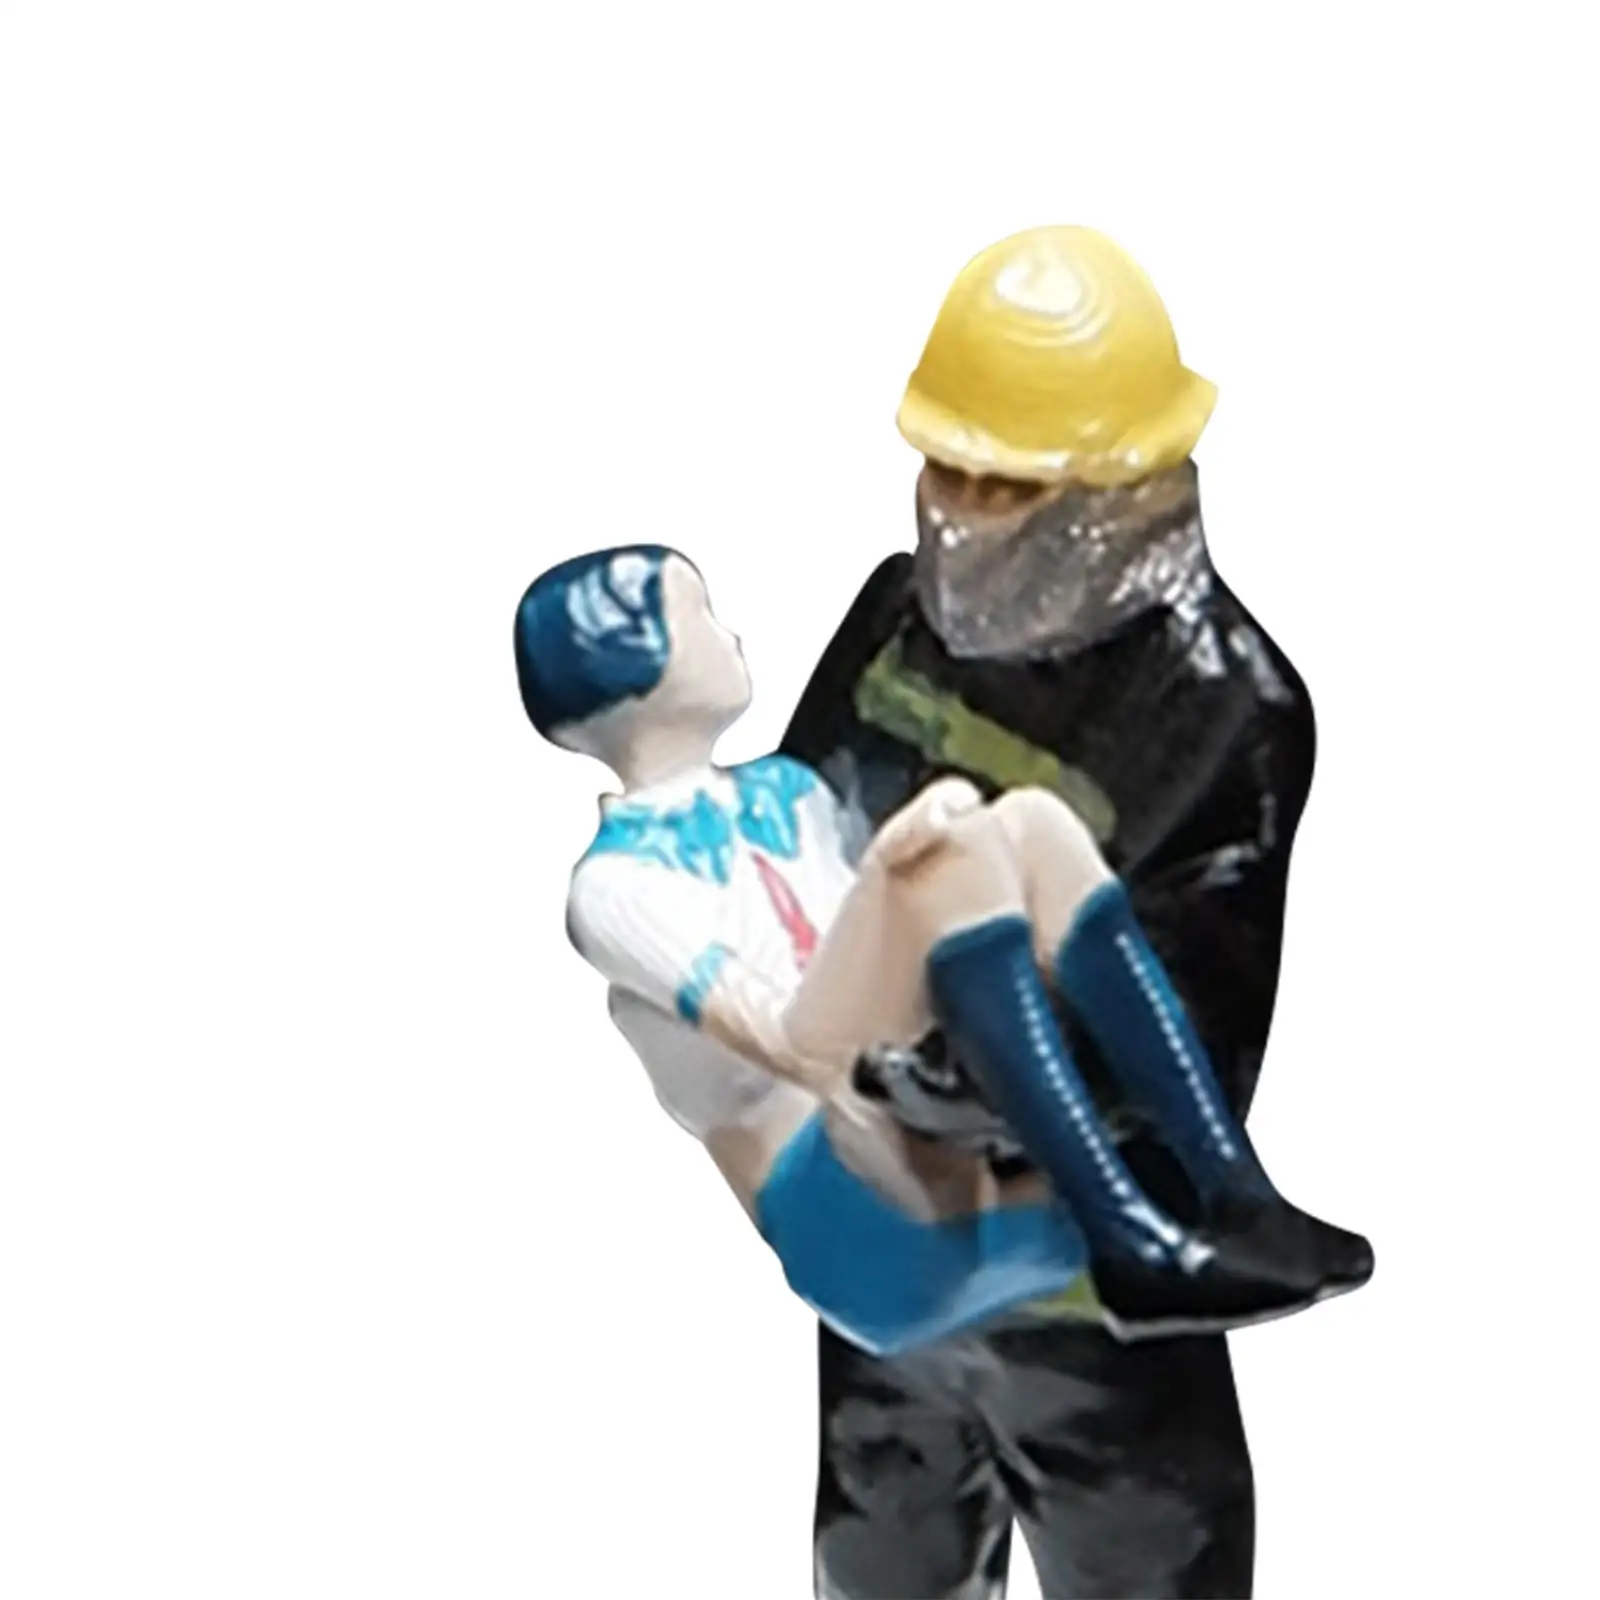 3cm Firefighter Dollhouse Play Figure, Fireman Action Figure Simulation